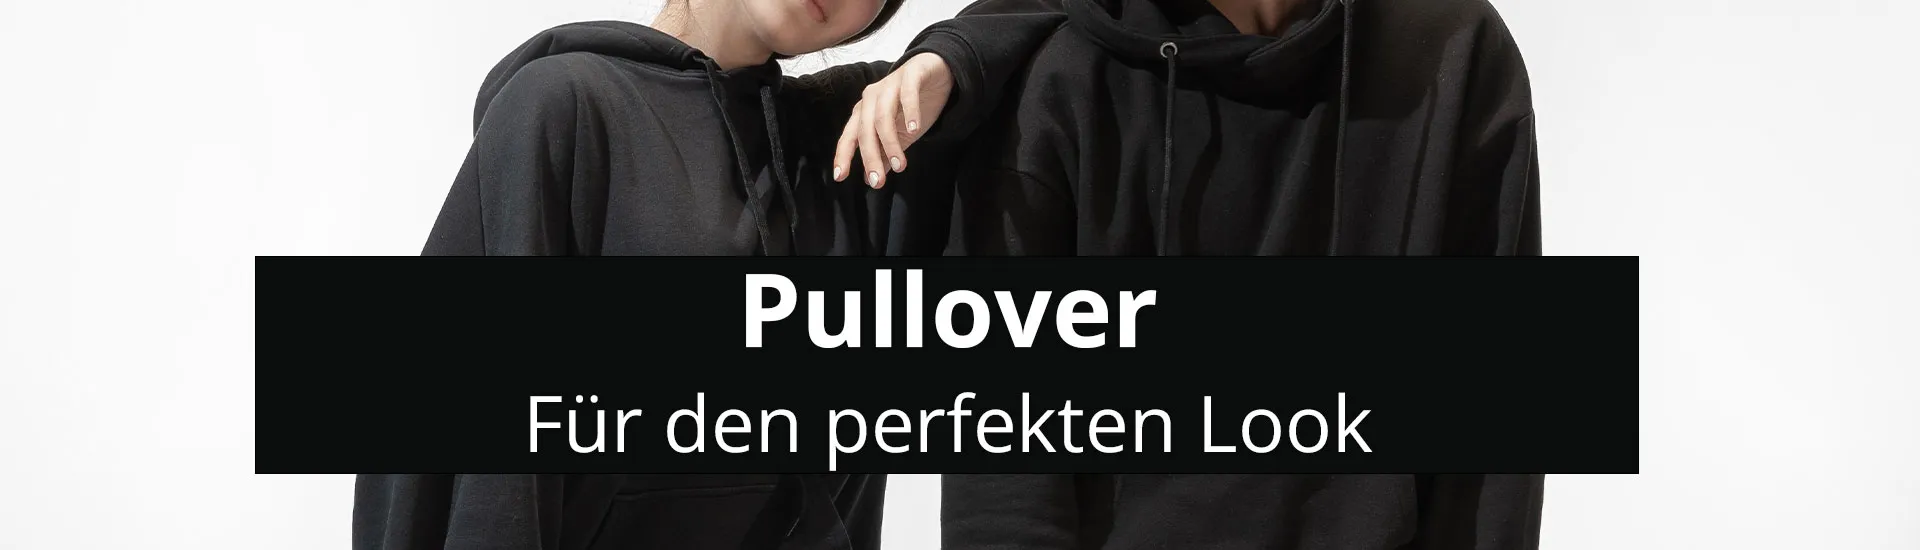 Pullover header rosier online shop